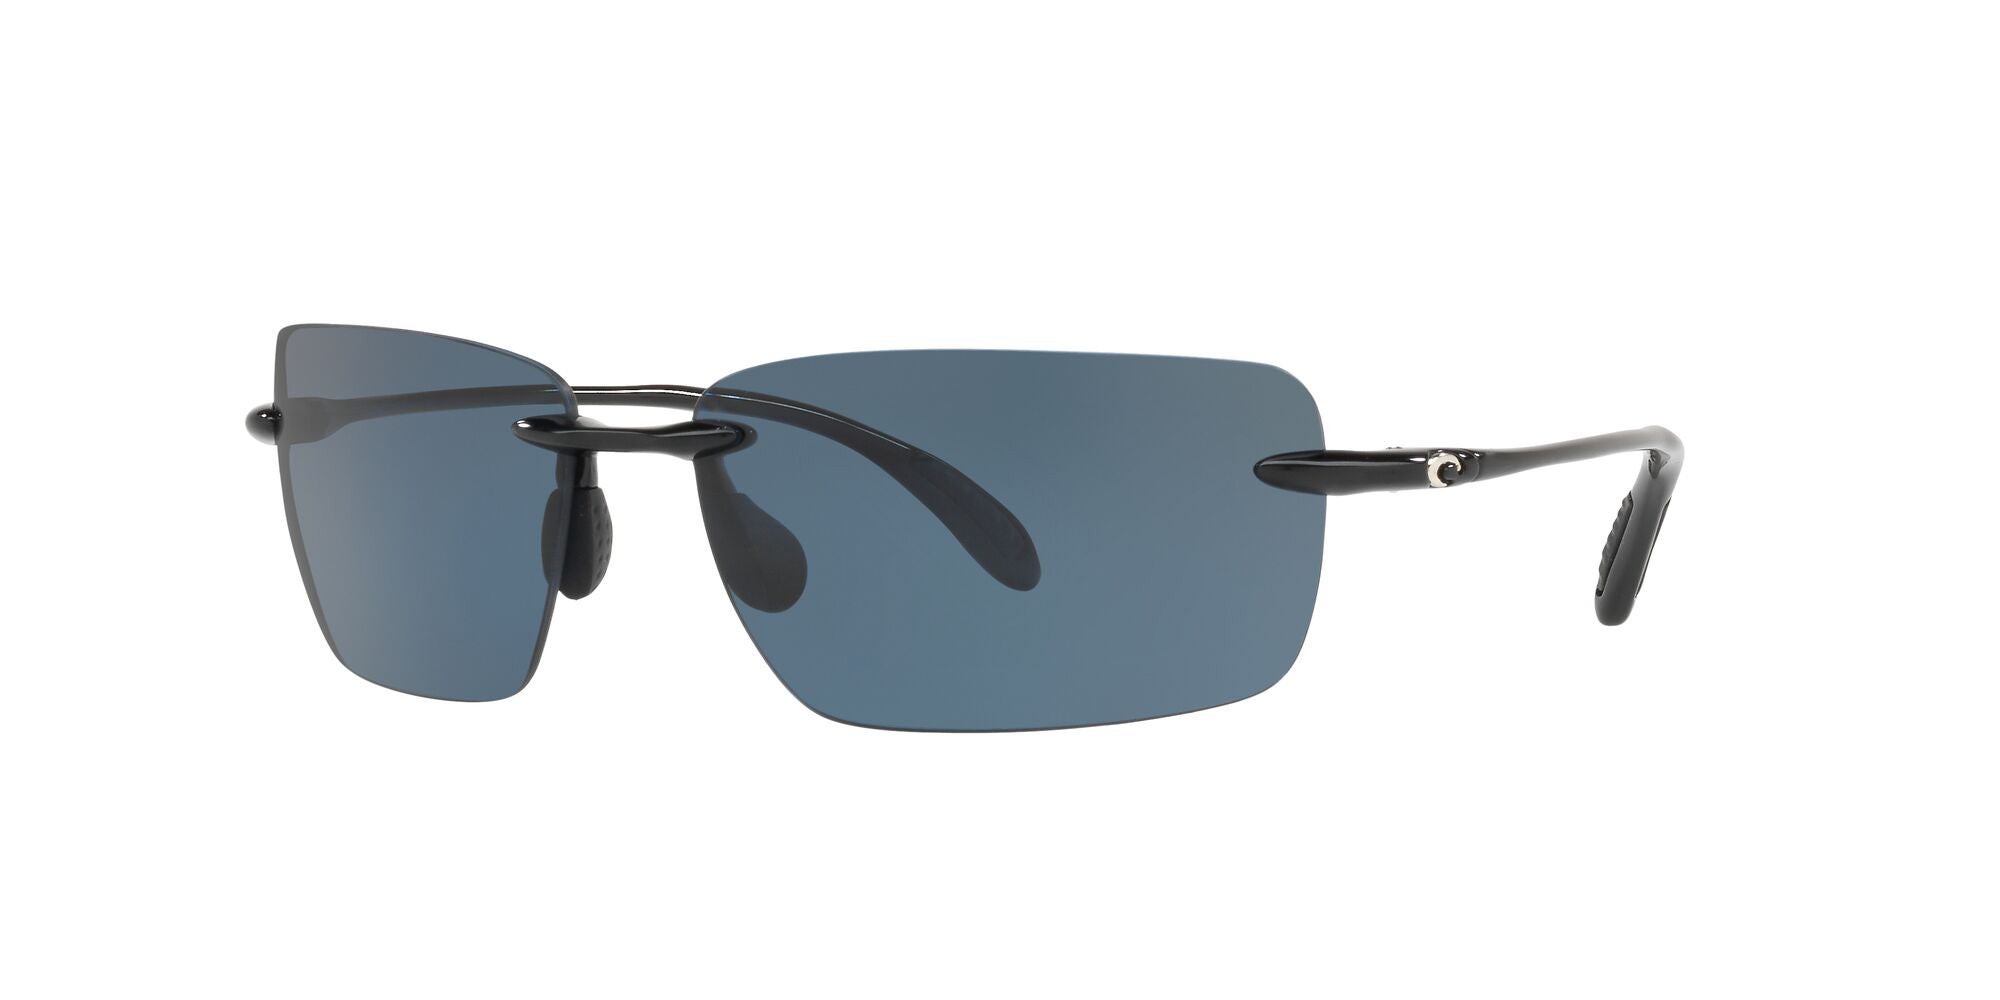 Gulf Shore Shiny Black Sunglasses w/ Polarized 580P Gray Lens